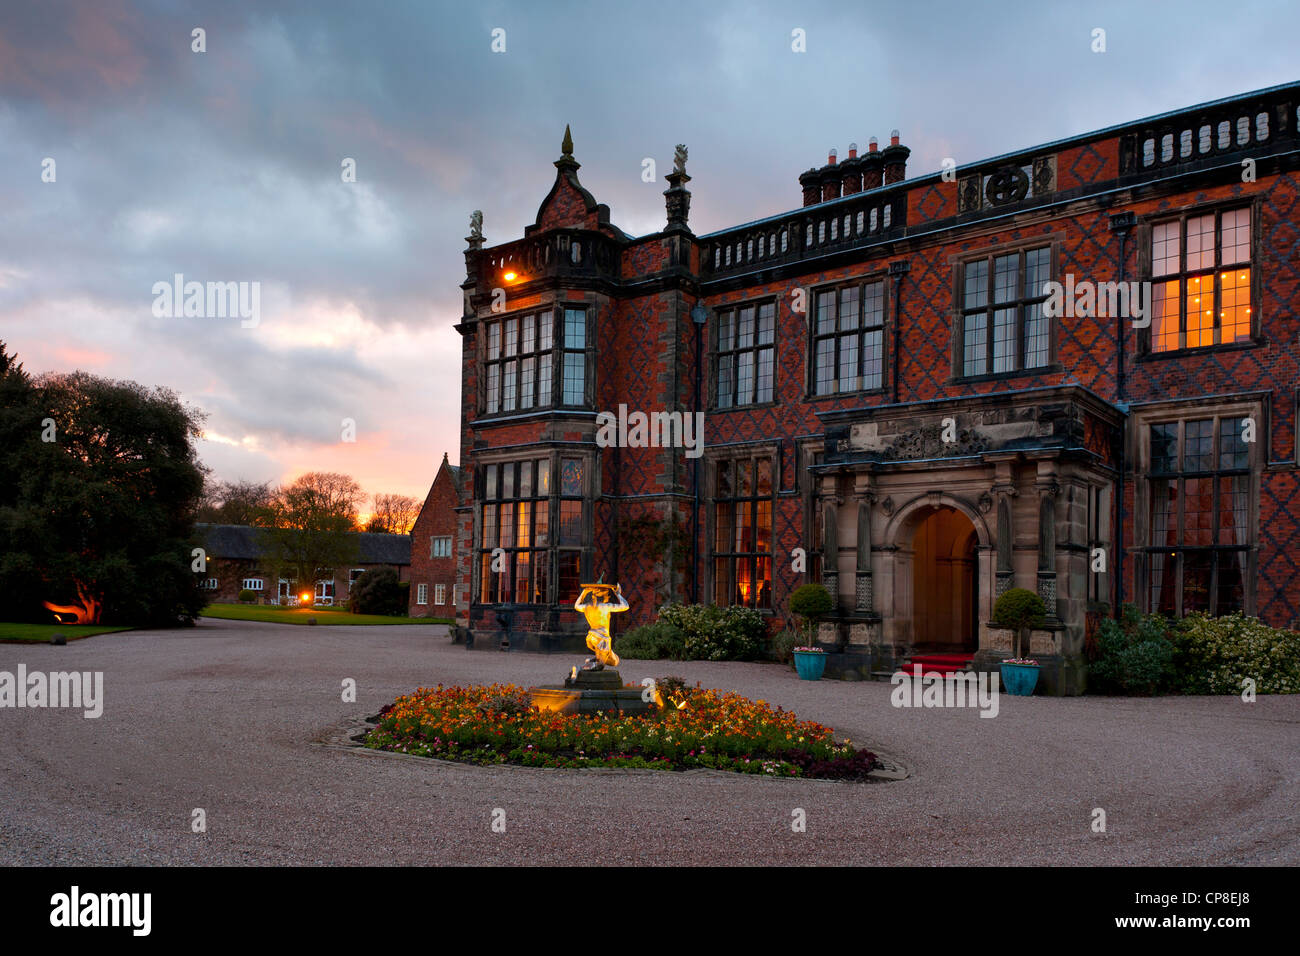 England, Cheshire, Arley Hall at twilight Stock Photo